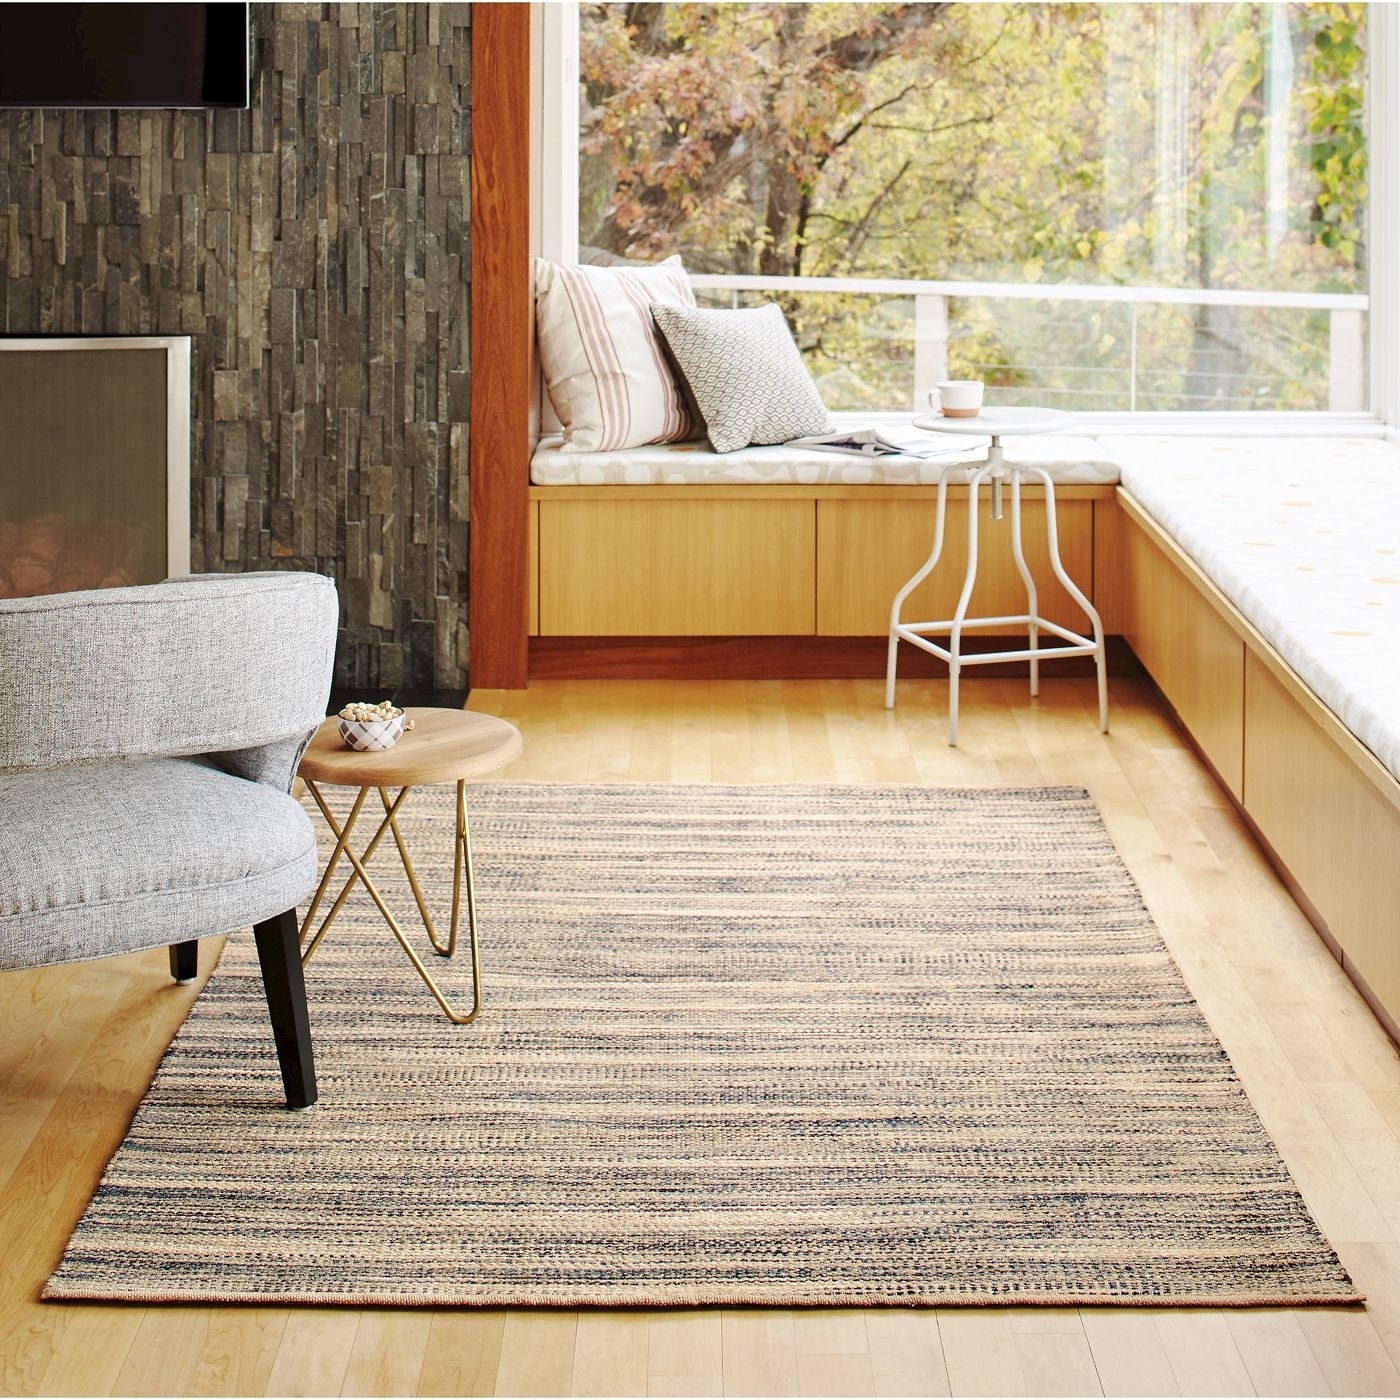 grey rectangular woven rug on hardwood floor